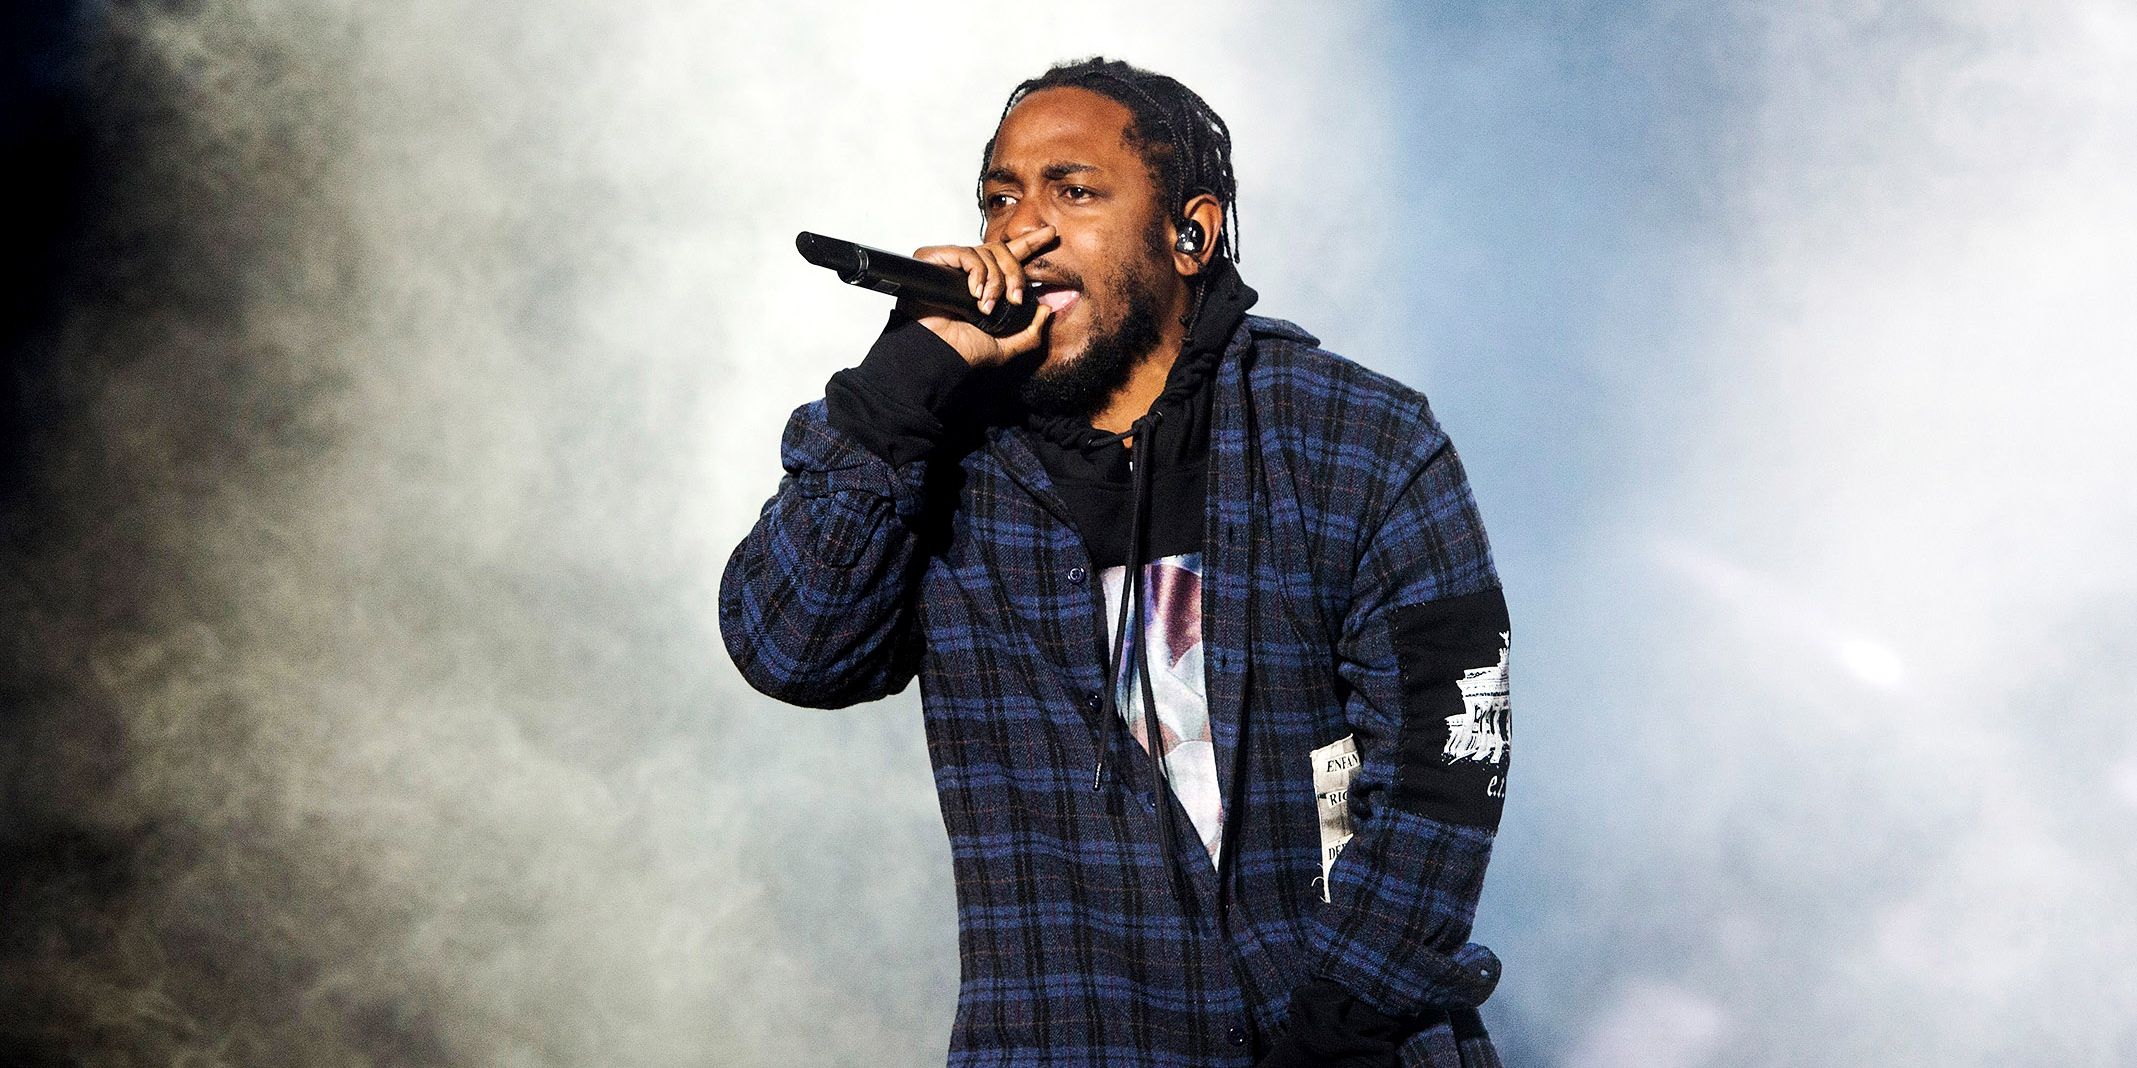 Kendrick Lamar Wallpapers - Top 25 Best Kendrick Lamar Backgrounds Download